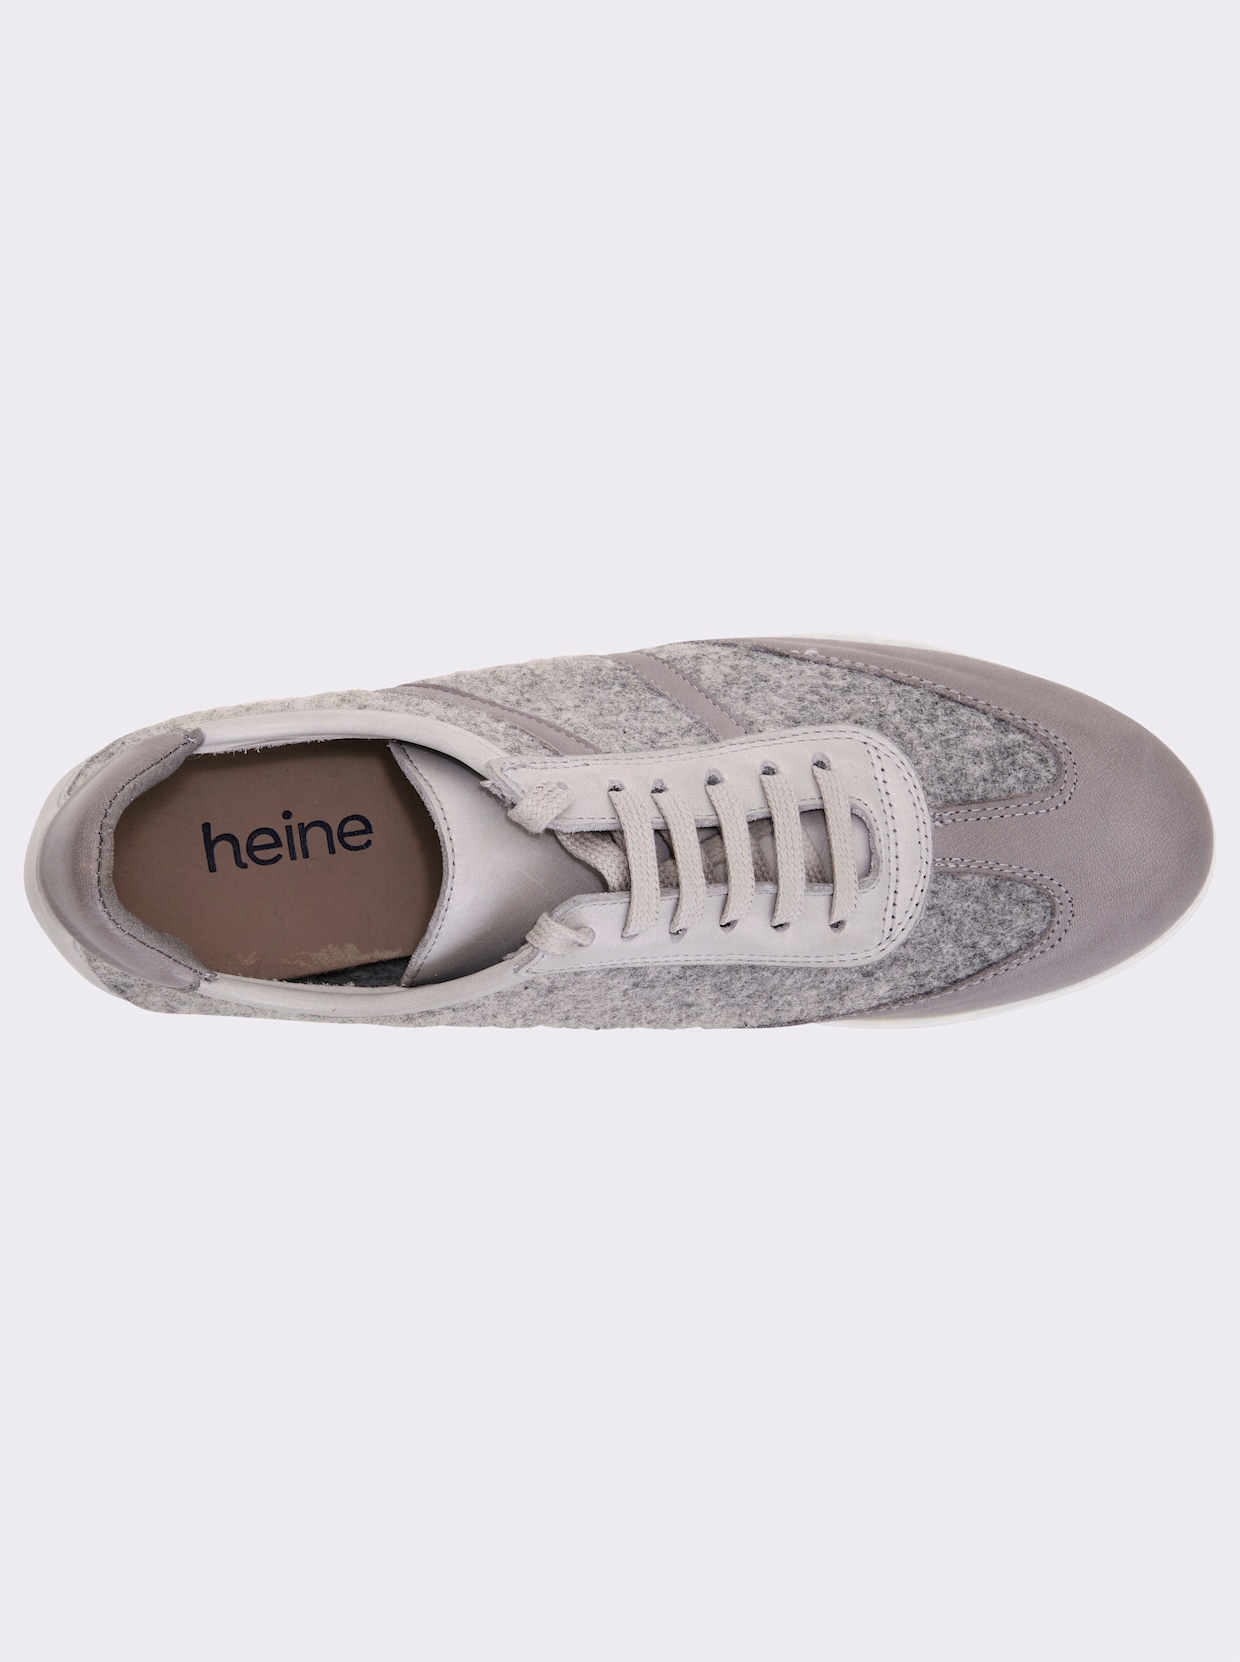 heine Sneaker - hellgrau-grau